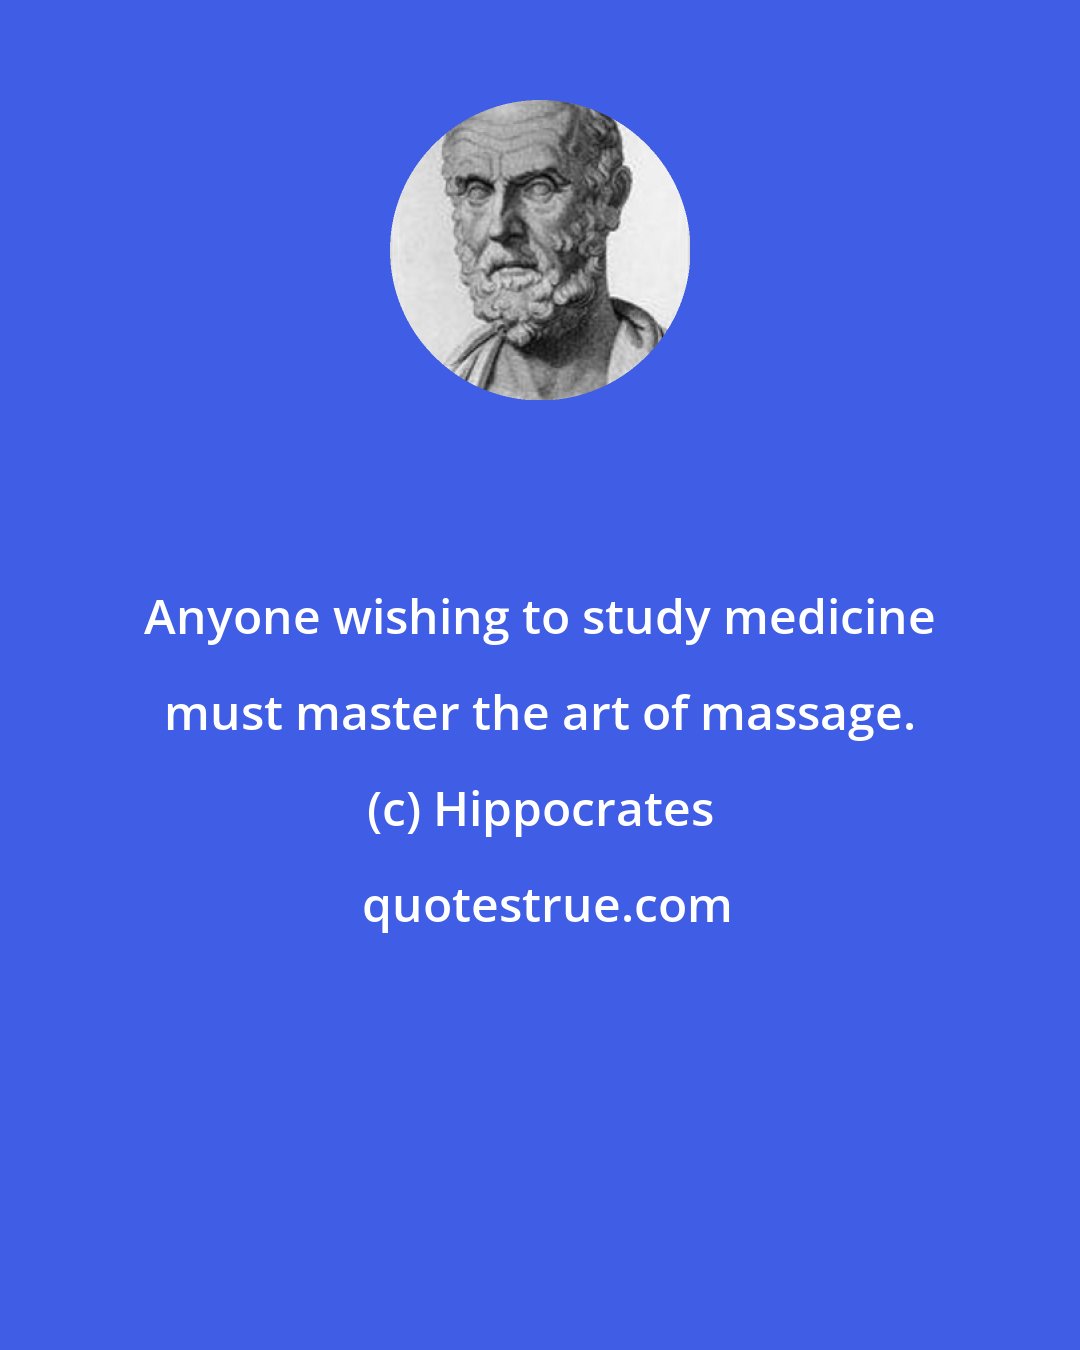 Hippocrates: Anyone wishing to study medicine must master the art of massage.